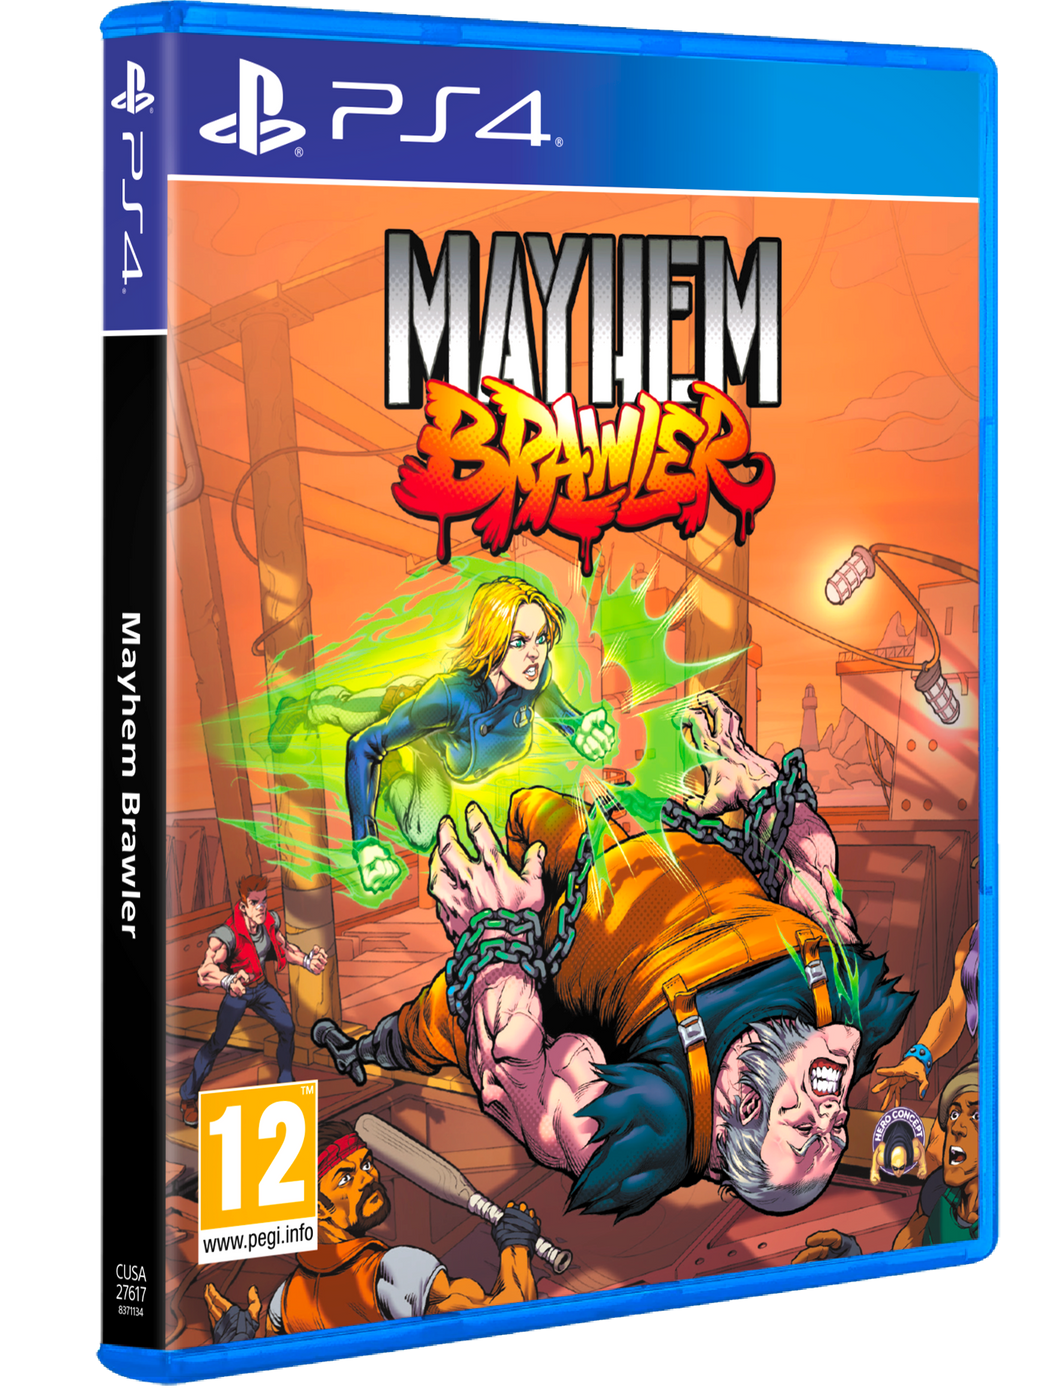 Mayhem brawler / Red art games / PS4 / 999 copies